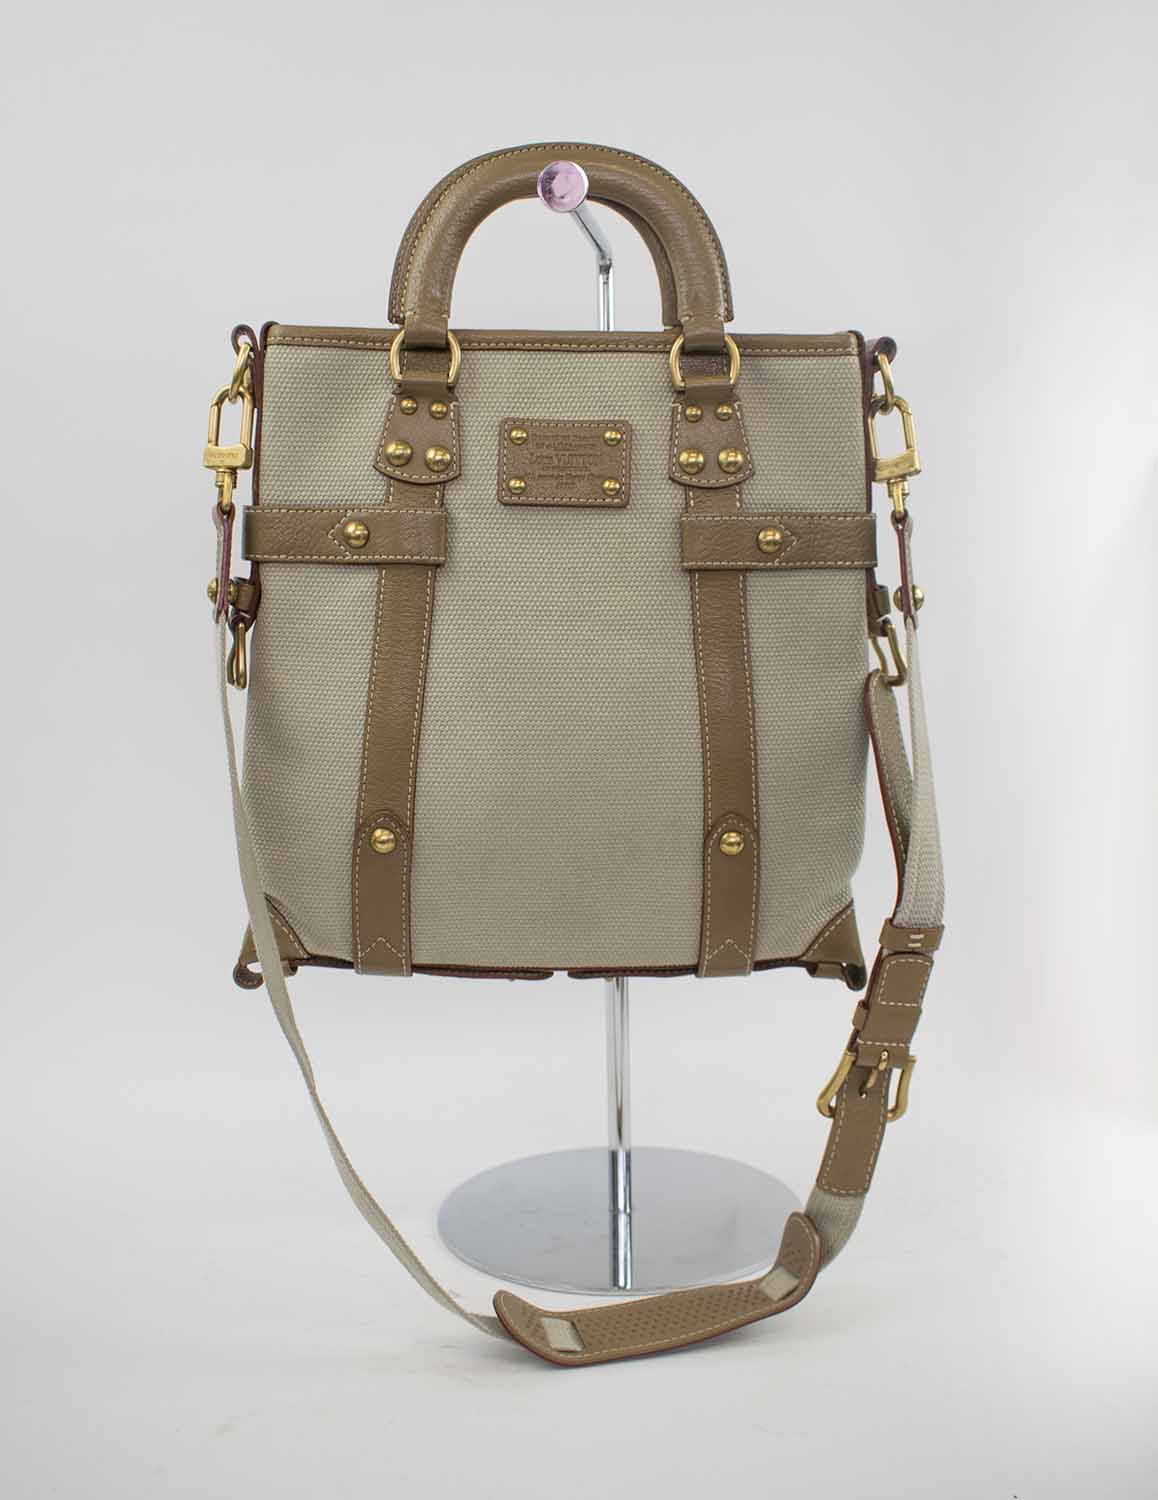 Shop Louis Vuitton Mini steamer pouch (M00340) by lifeisfun